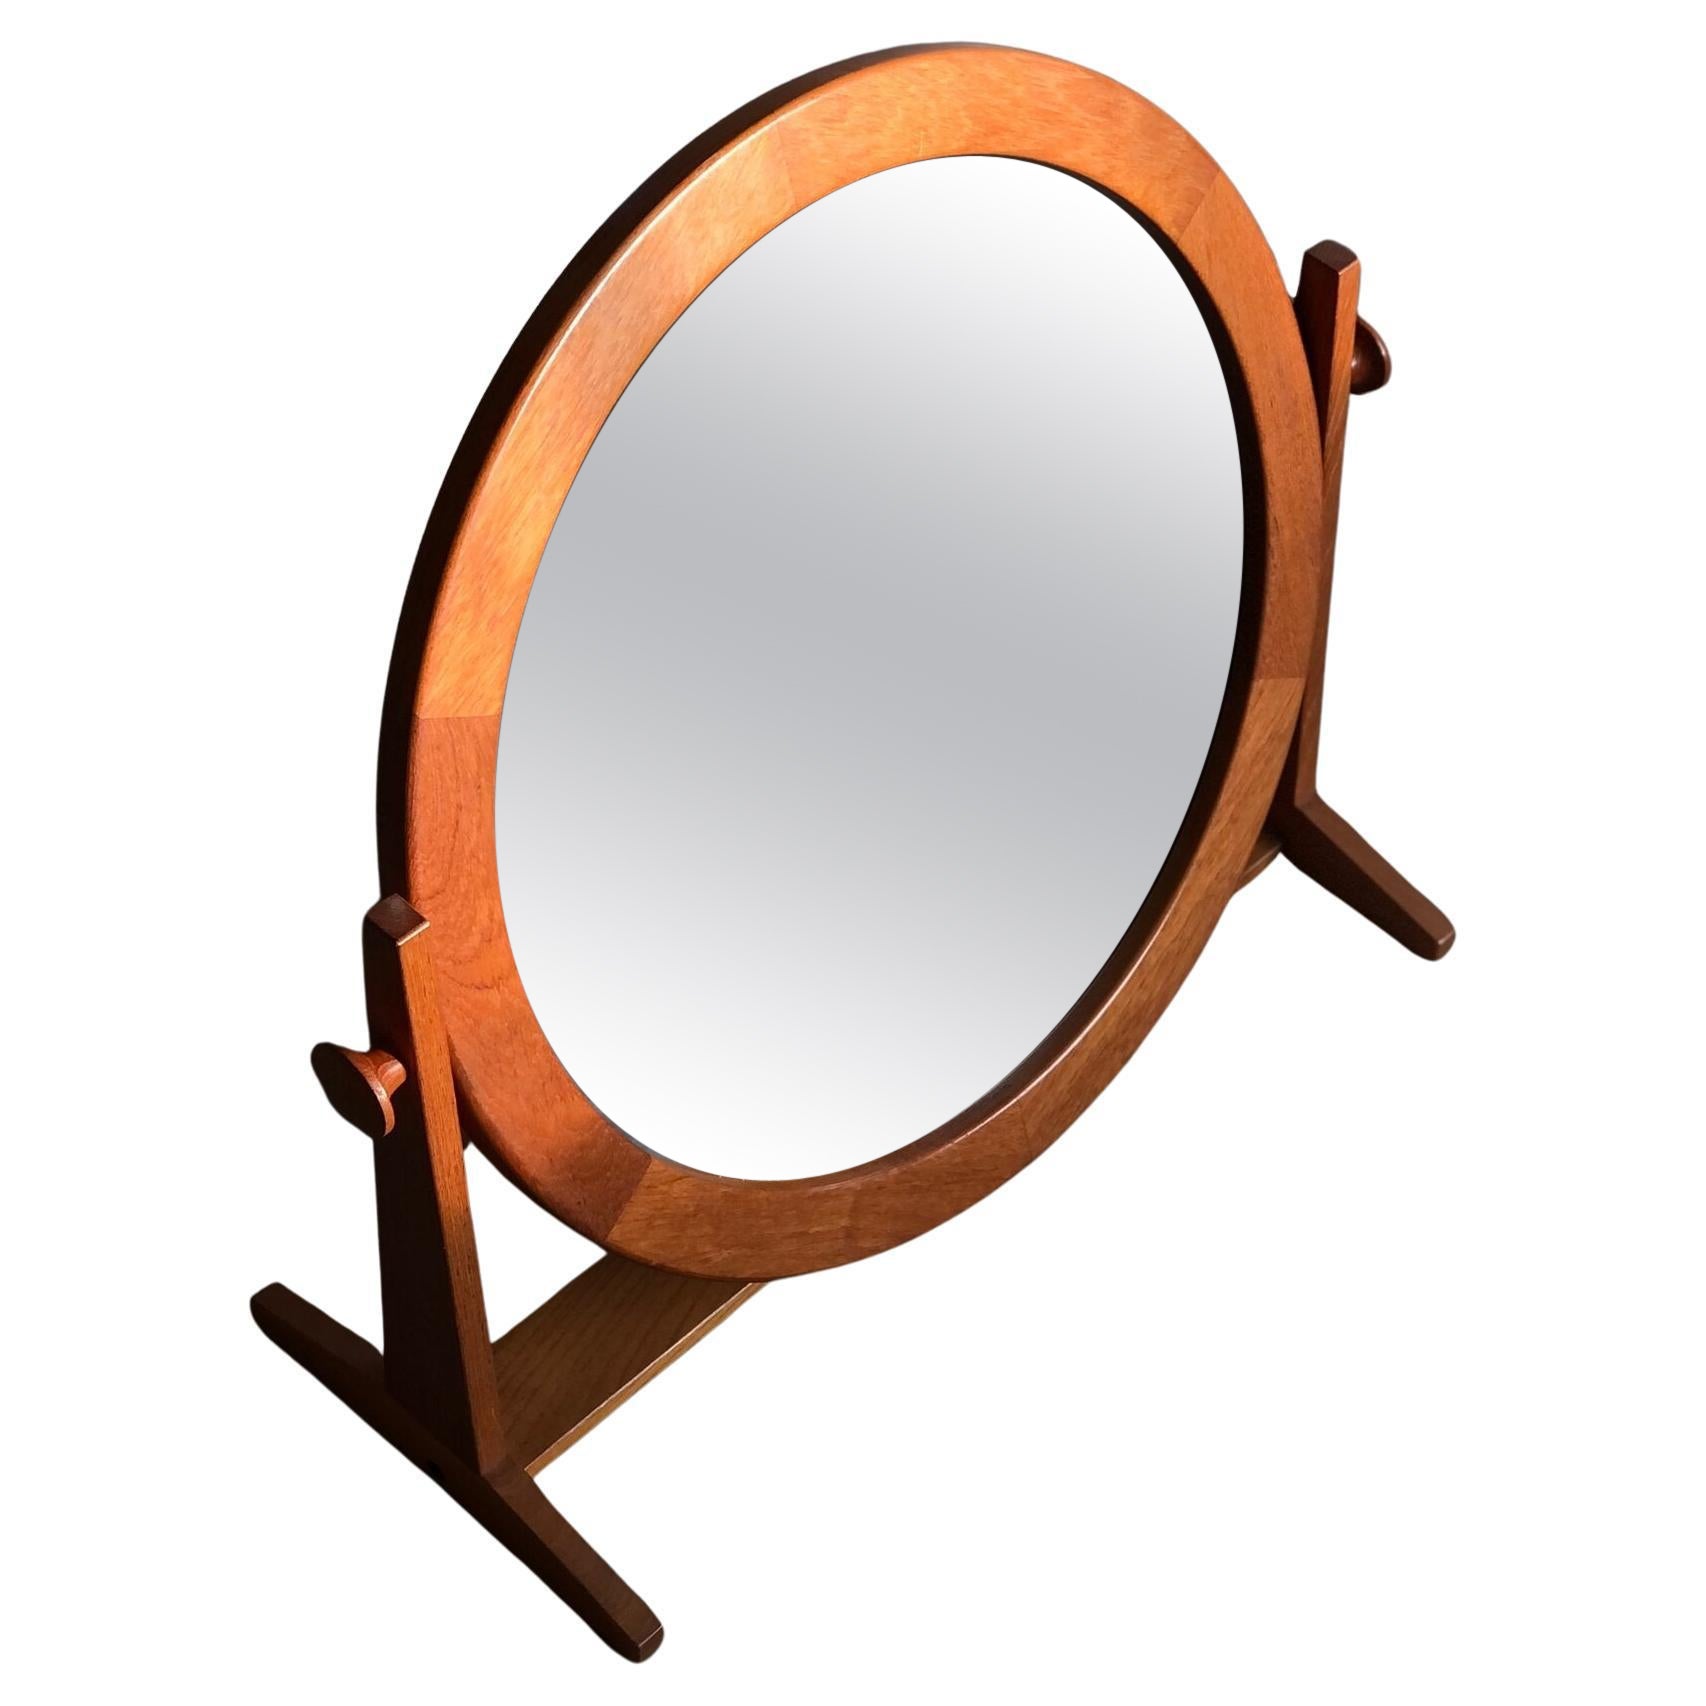 Pedersen and Hansen Circular Teak Table-top Mirror For Sale